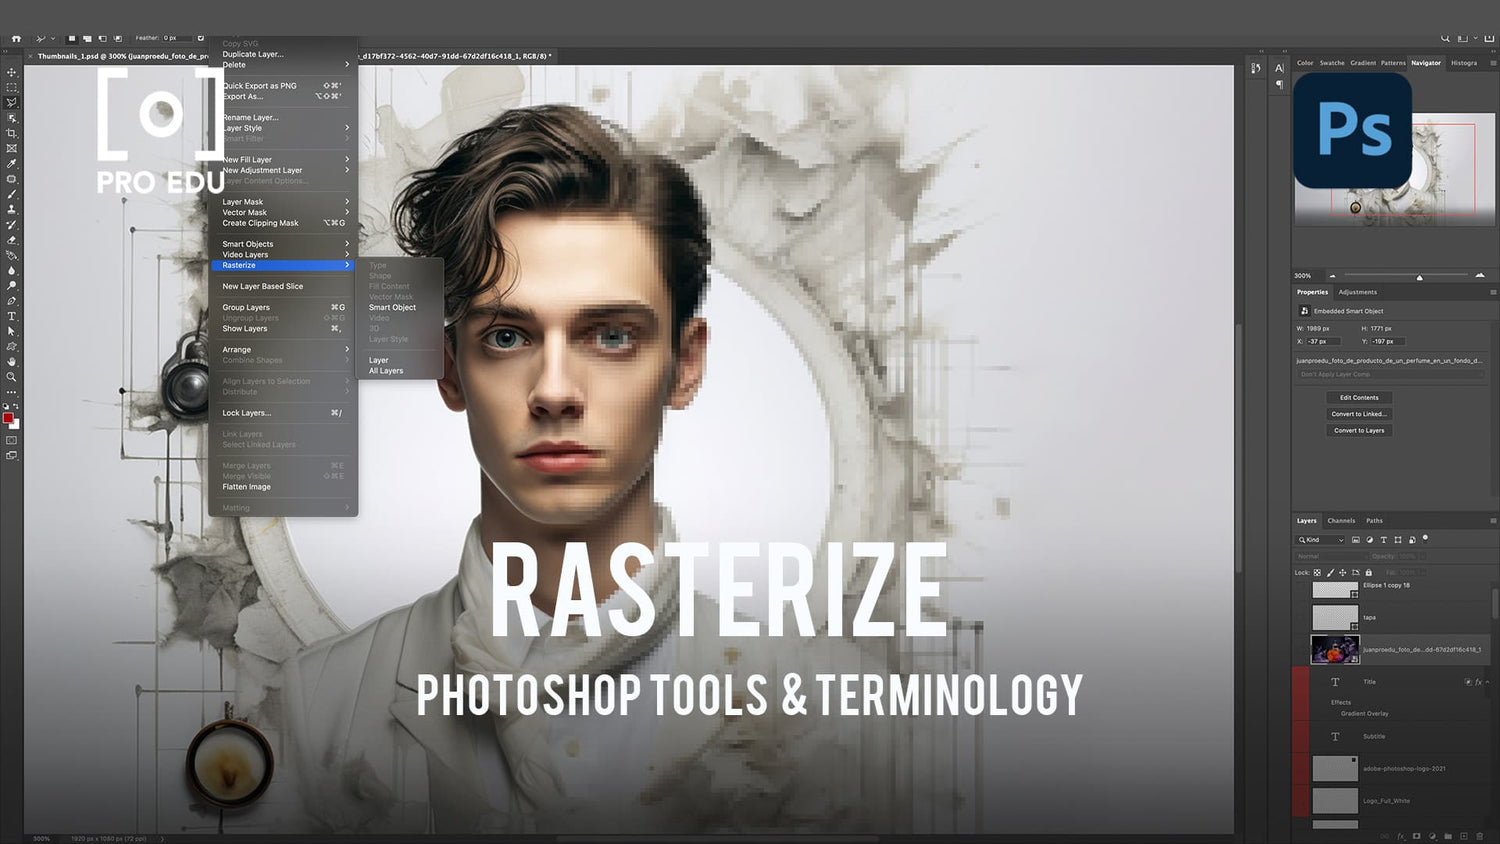 Rasterize Function in Photoshop - PRO EDU Guide